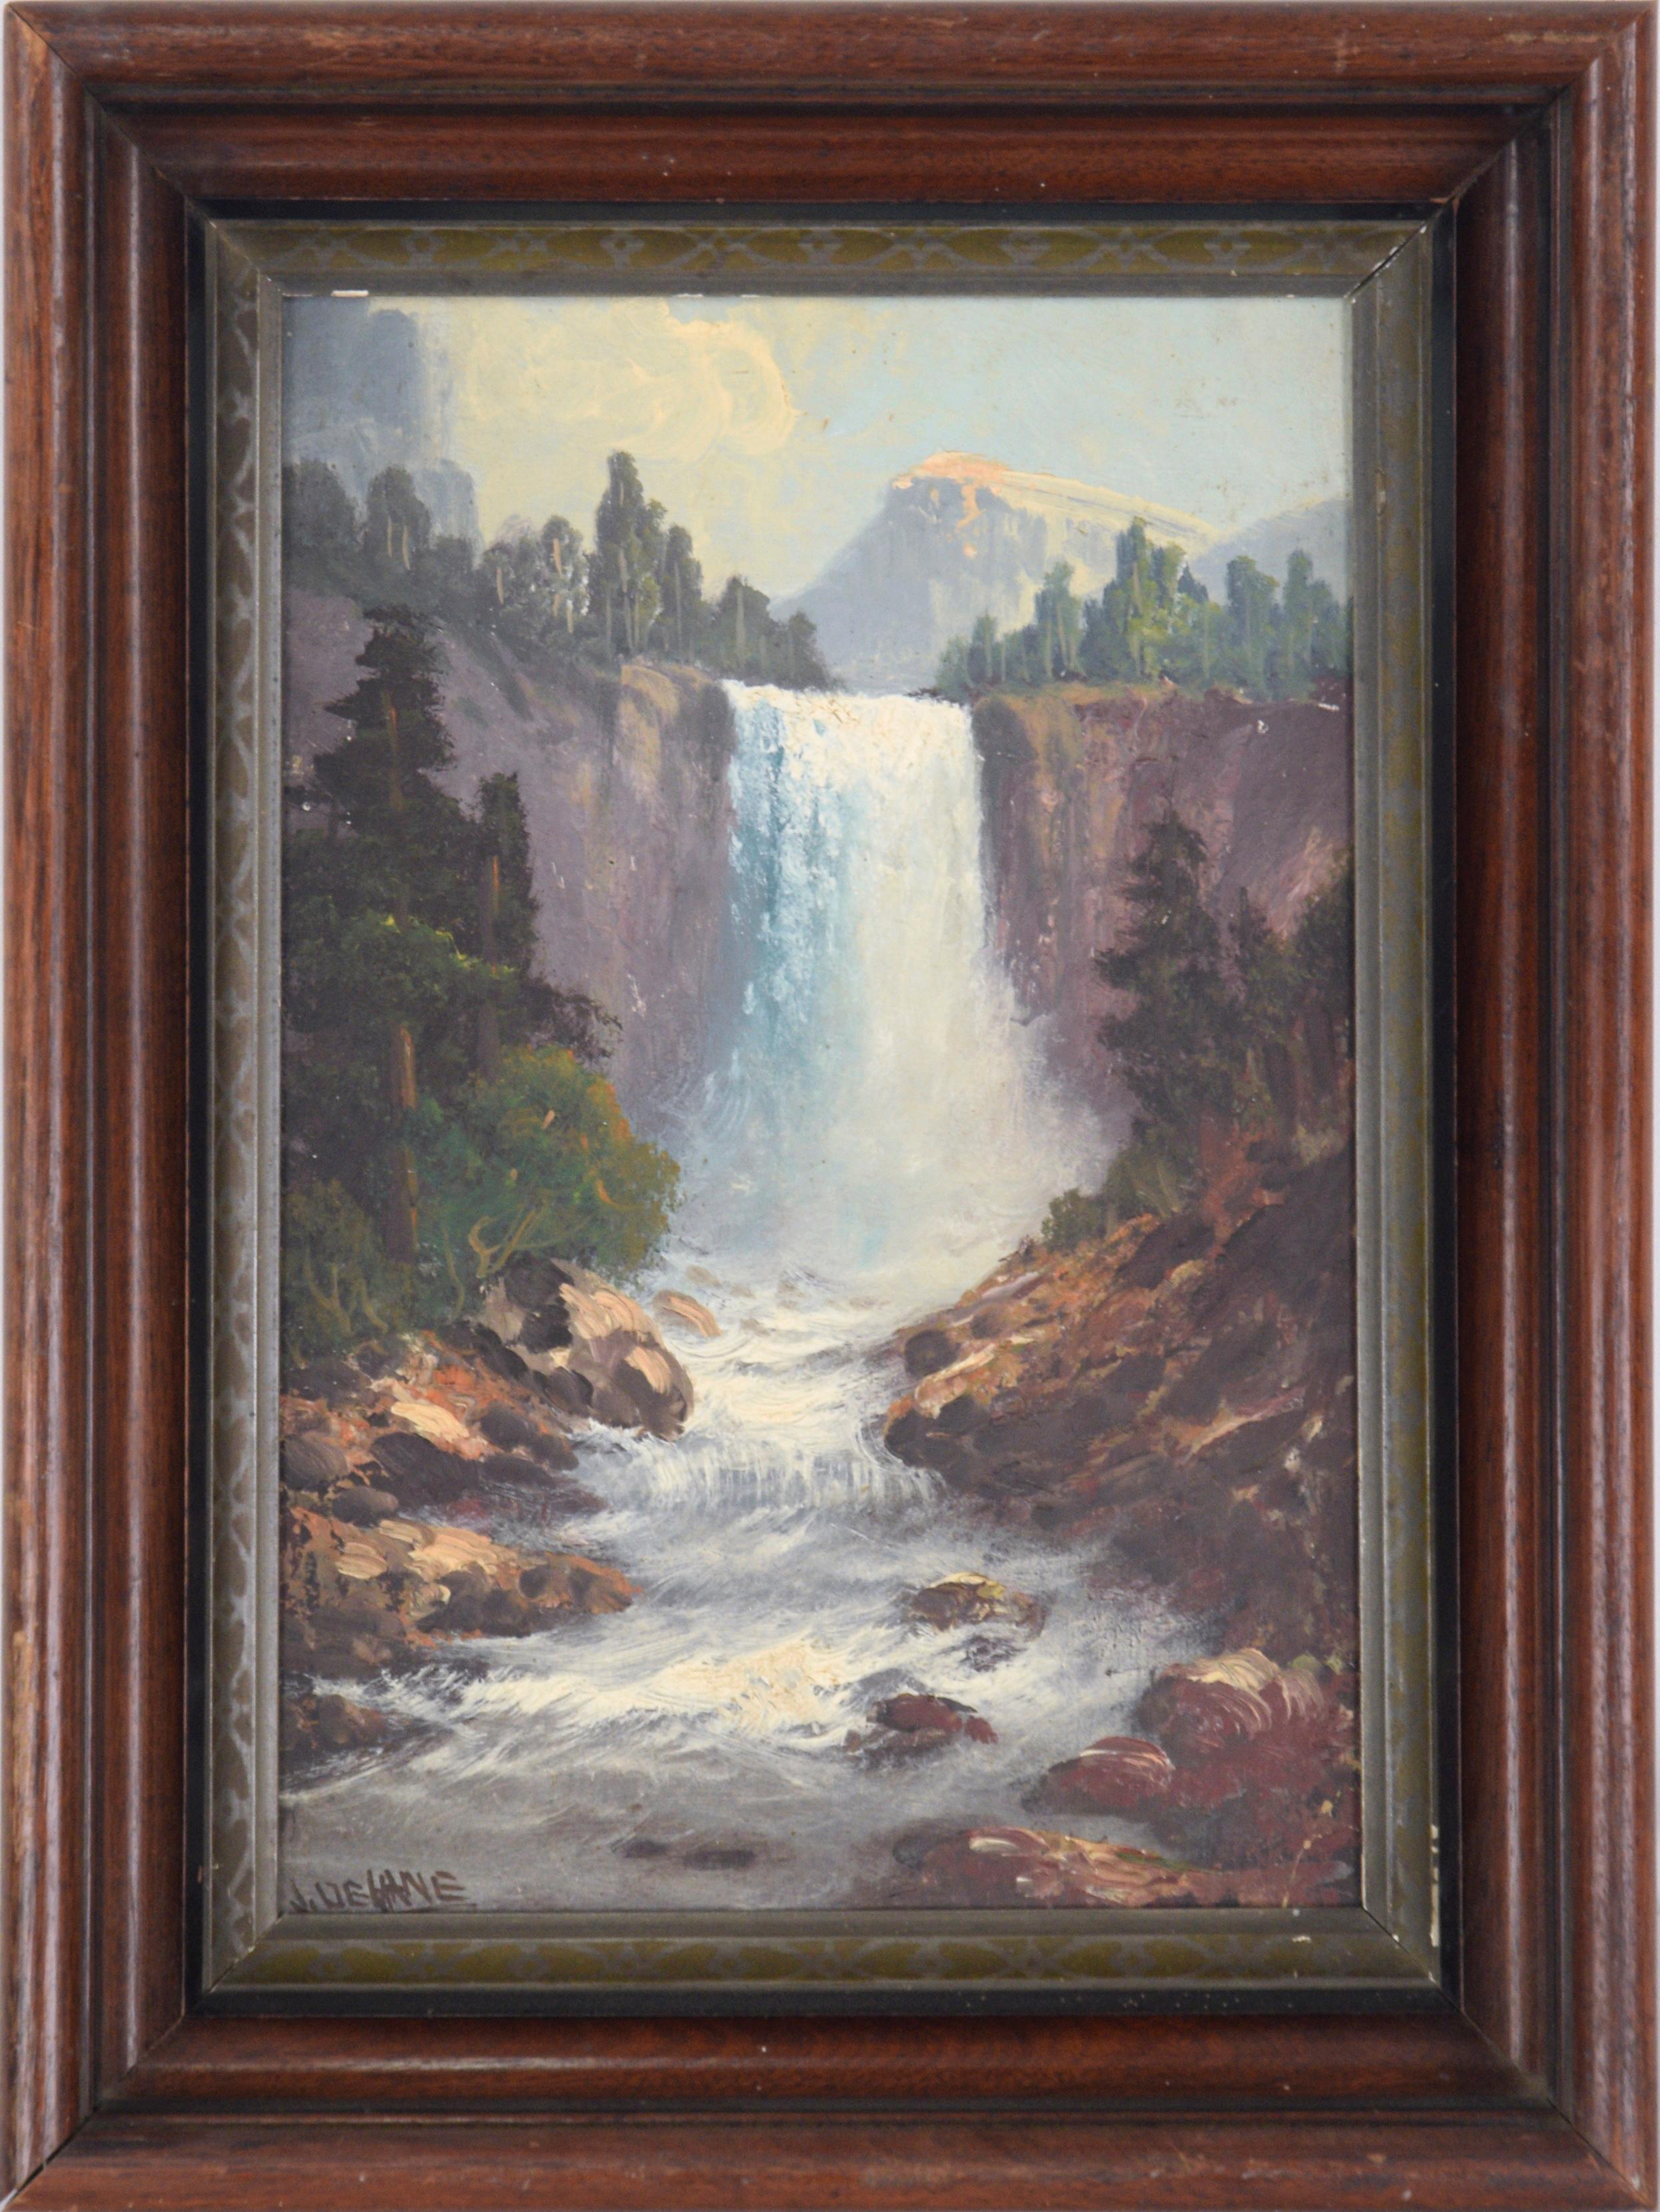 Vernal Falls - Yosemite Waterfall Landscape by John Englehart